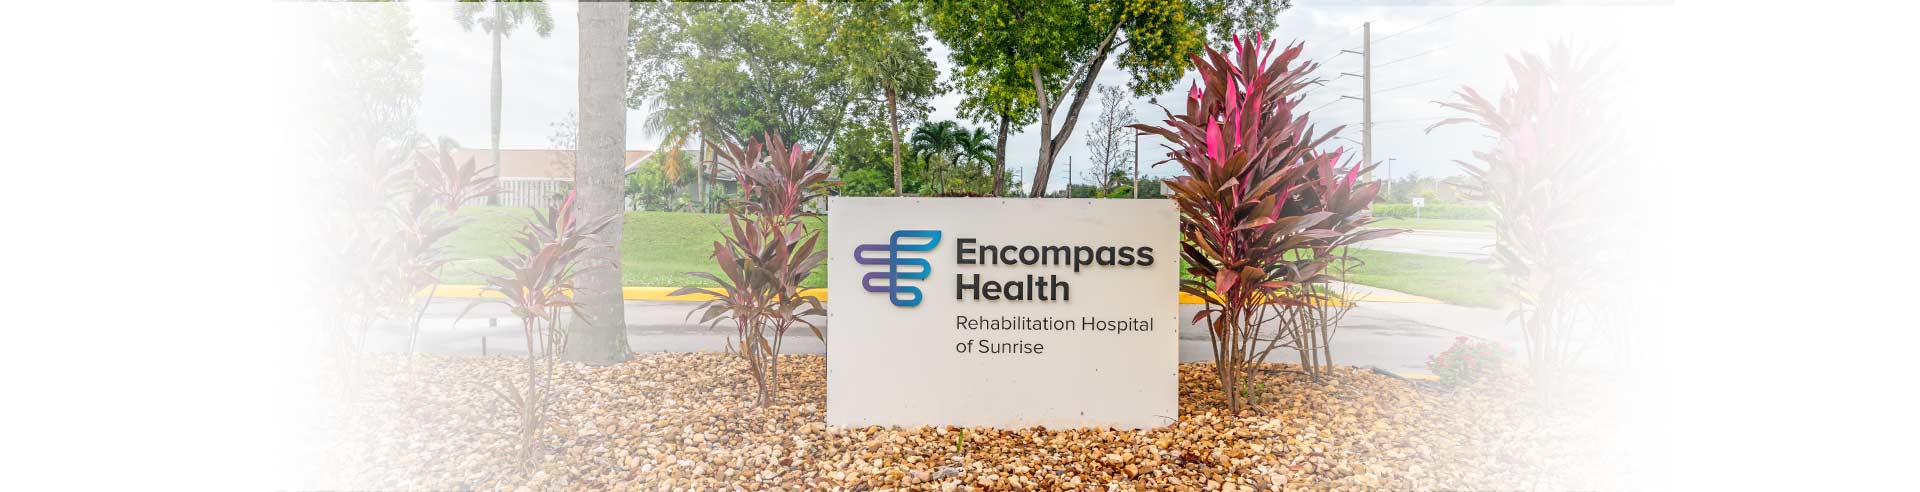 Encompass Health Rehabilitation Hospital of Sunrise exterior image